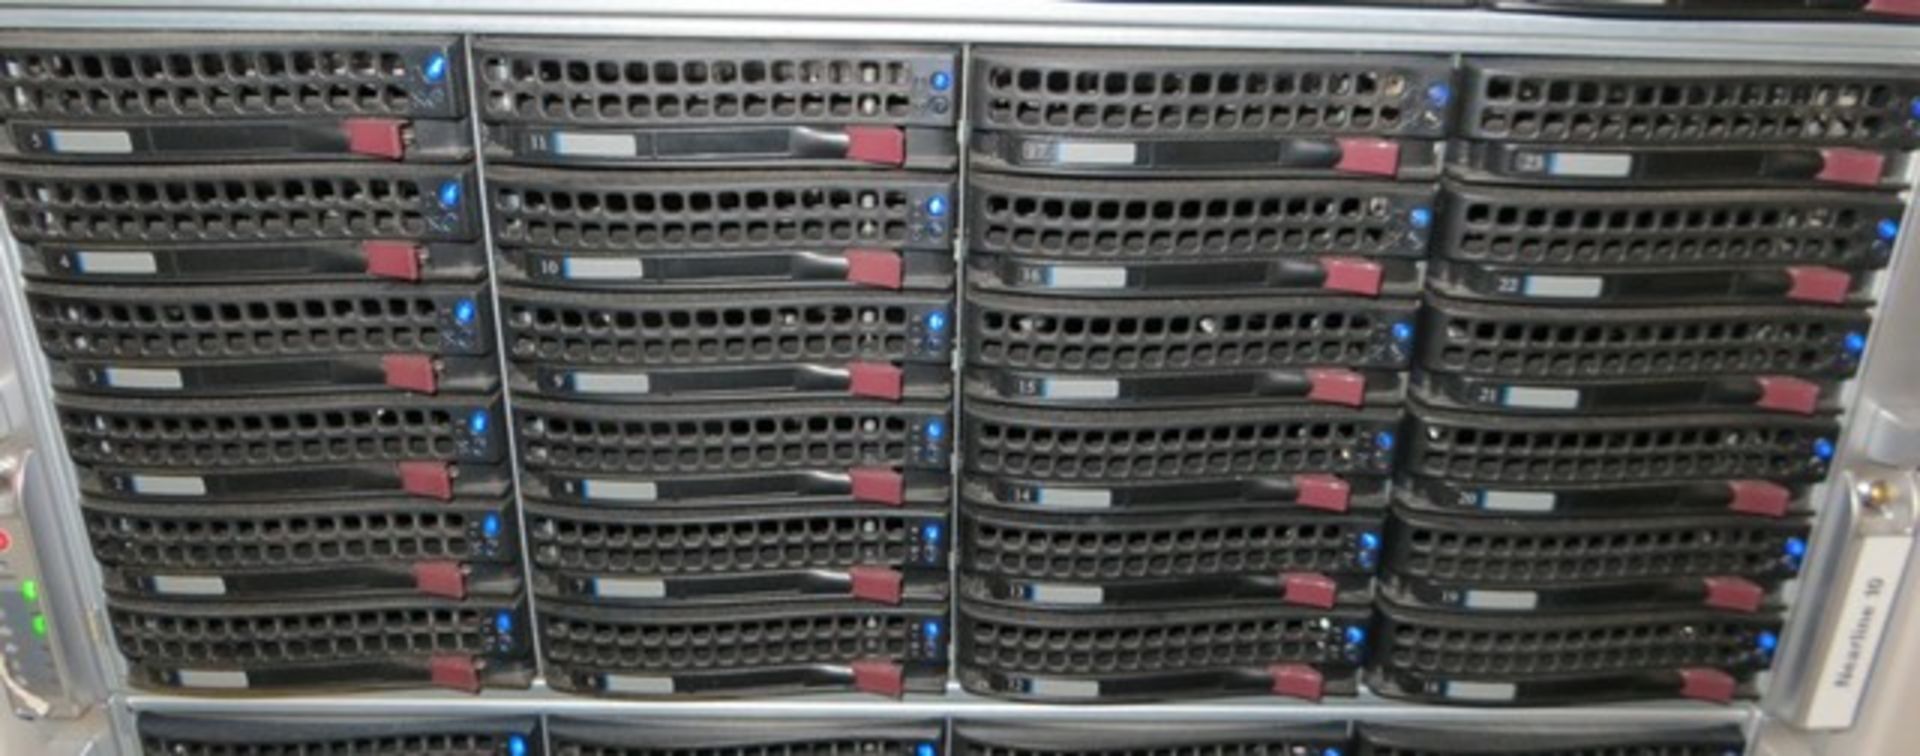 Supermicro storage array model CSE-847 s/n c84700a13b40115 with 34 x 3Tb hard drives & 2 x 500Gb h